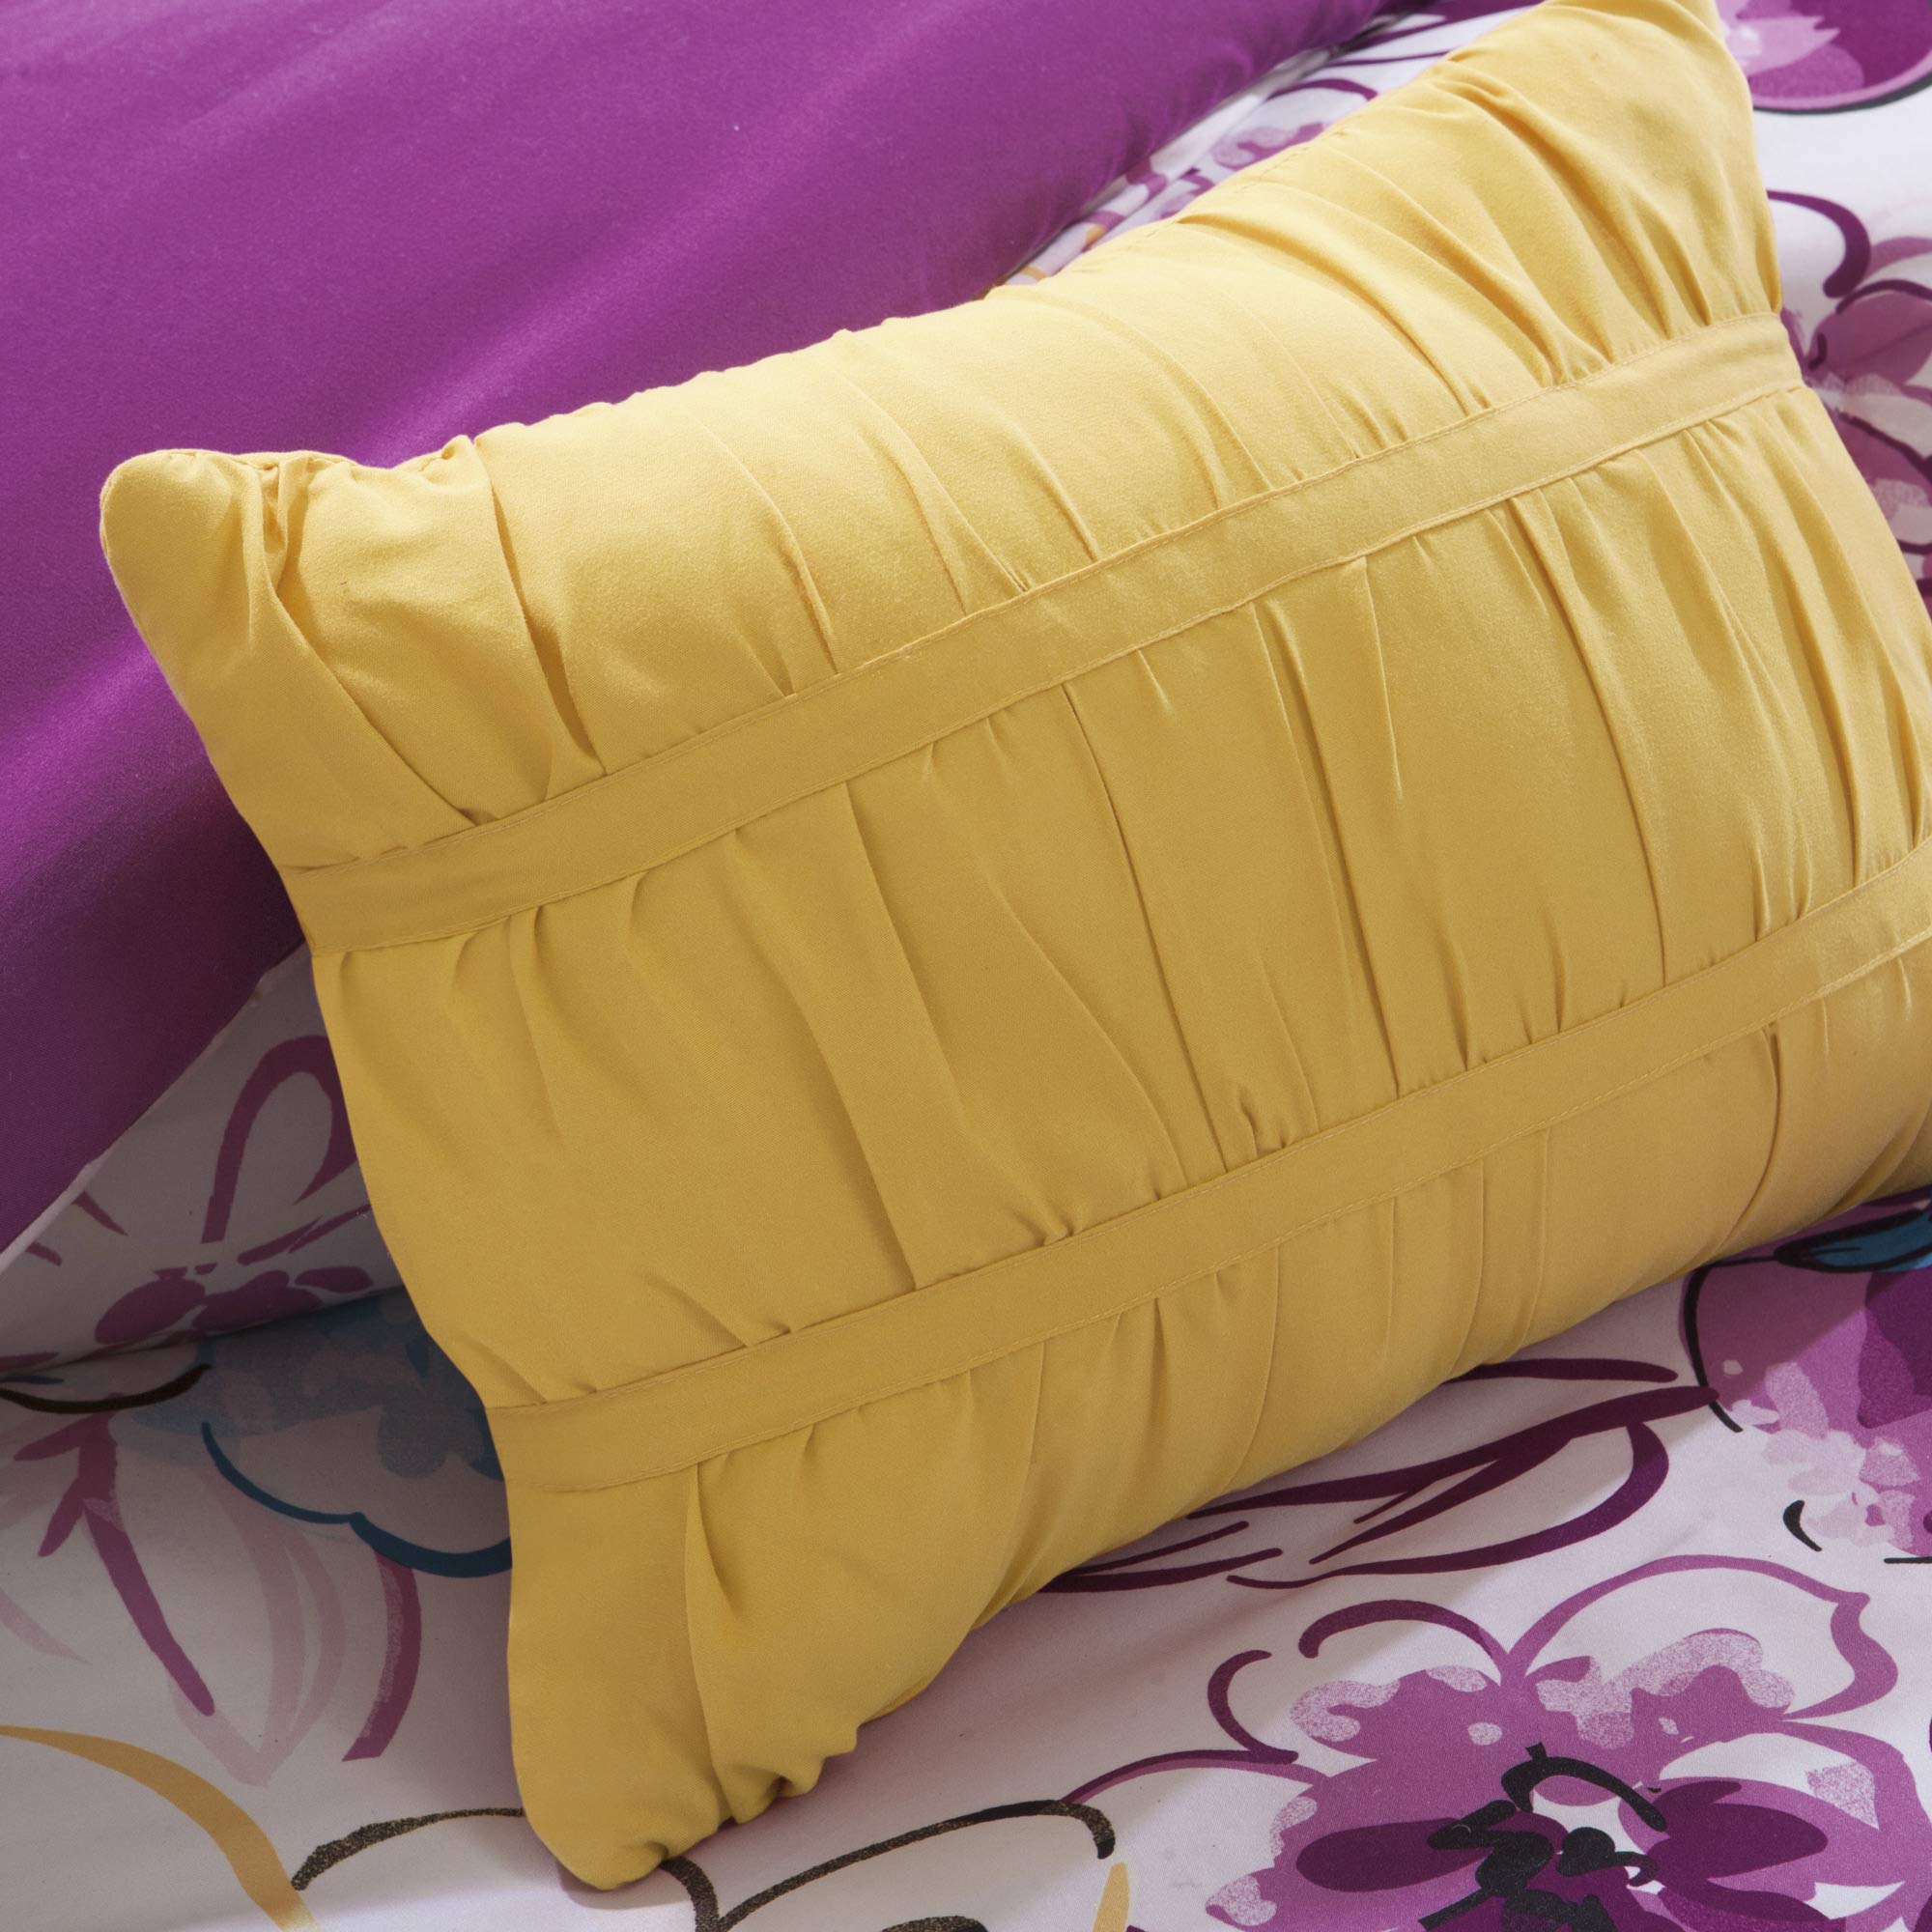 Intelligent Design Comforter Set Vibrant Floral Design, Teen Bedding for Girls Bedroom, Mathcing Sham, Decorative Pillow, Full/Queen, Olivia, Blue